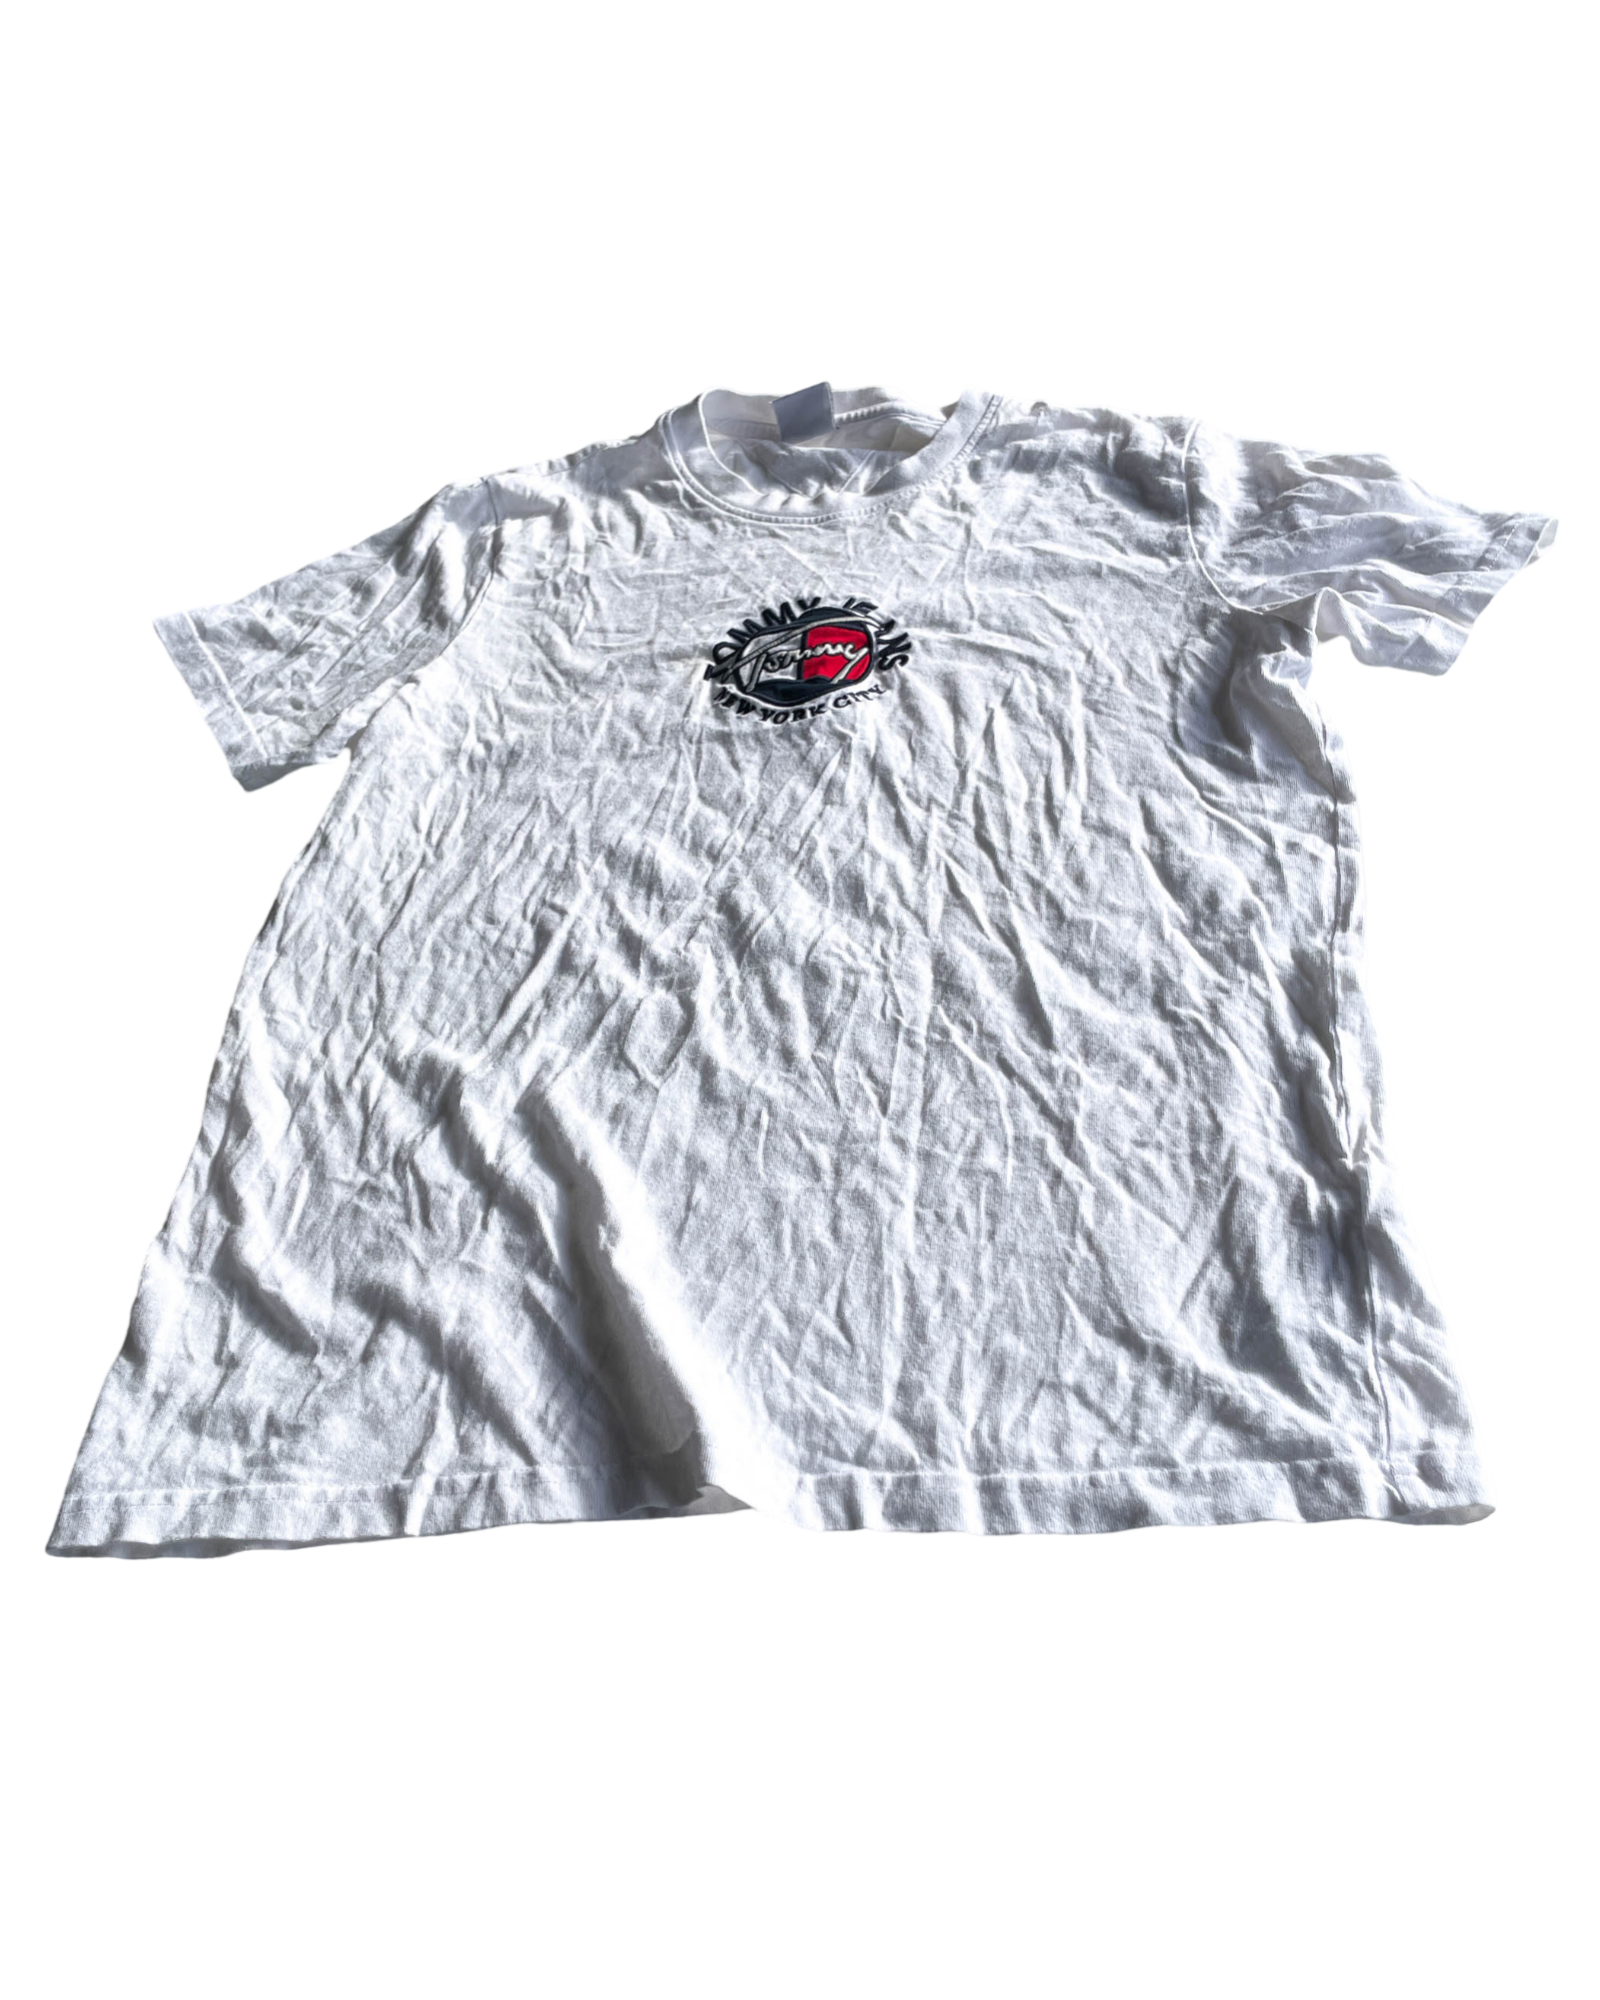 VTG Tommy Jeans Timeless Signature White Logo T-Shirt. In size medium